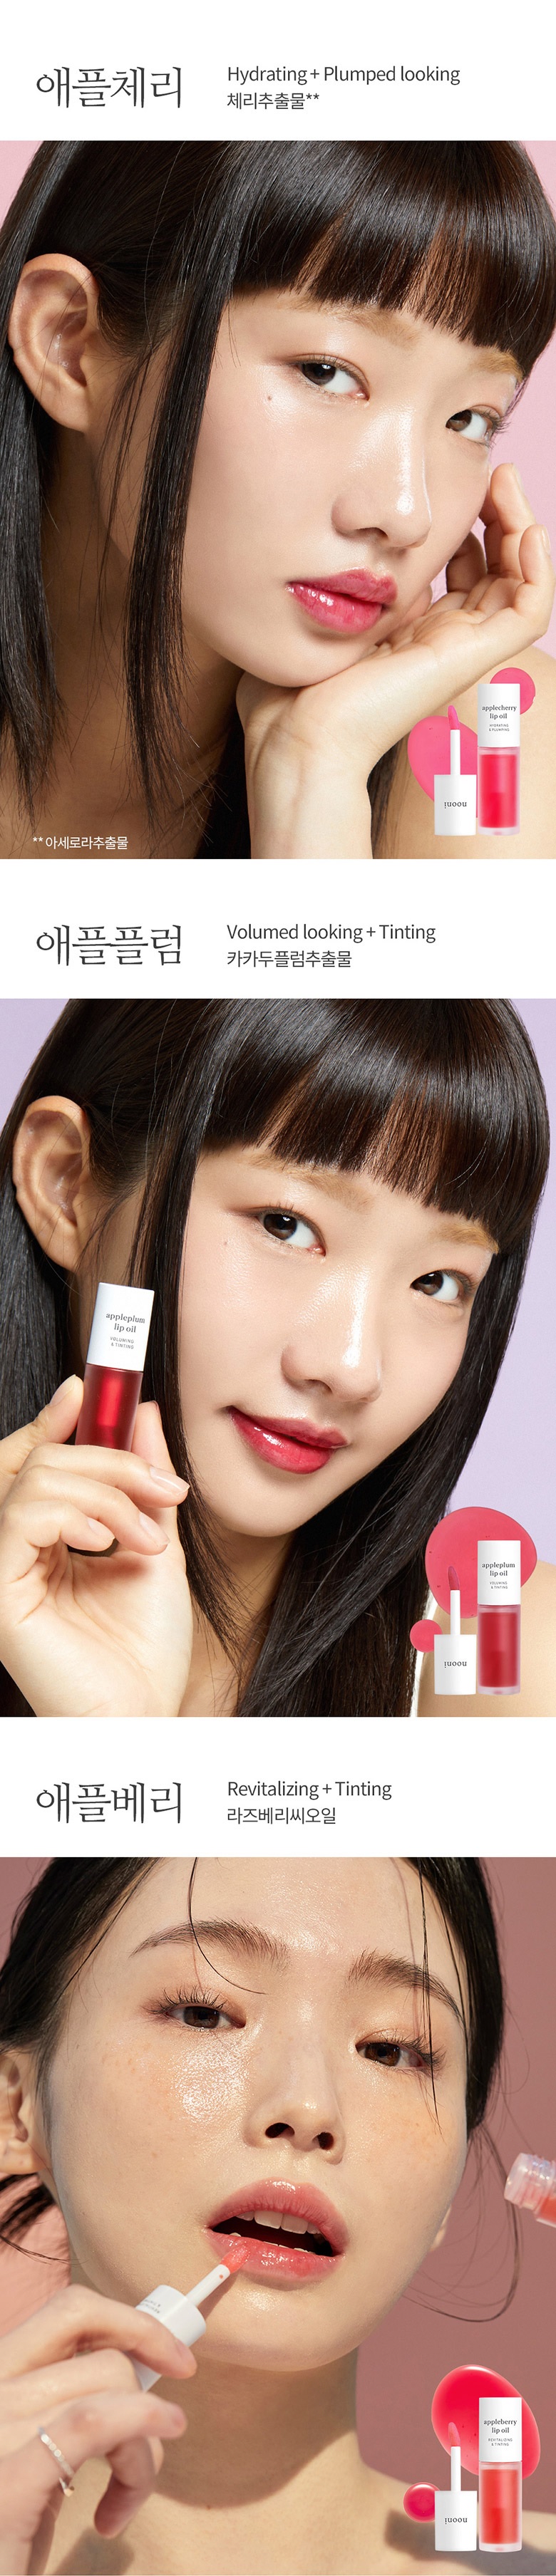 MEMEBOX Nooni Apple Lip Oil korean skincare product online shop malaysia china macau3